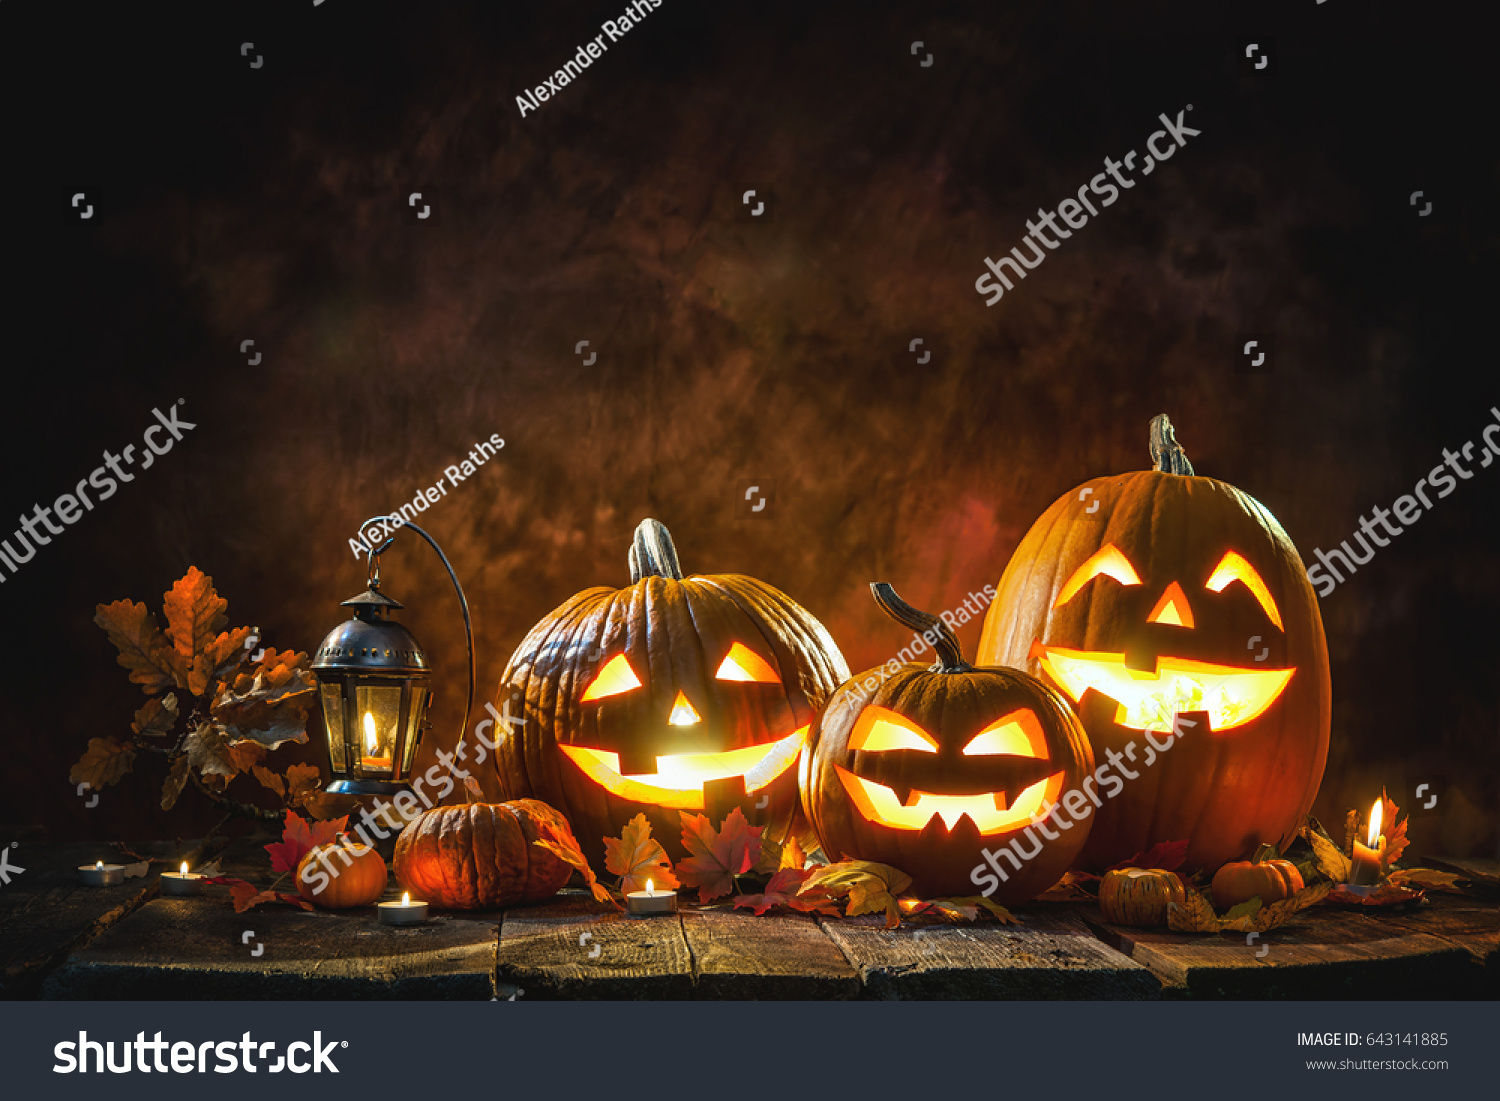 Halloween pumpkin head jack lantern with burning candles #643141885